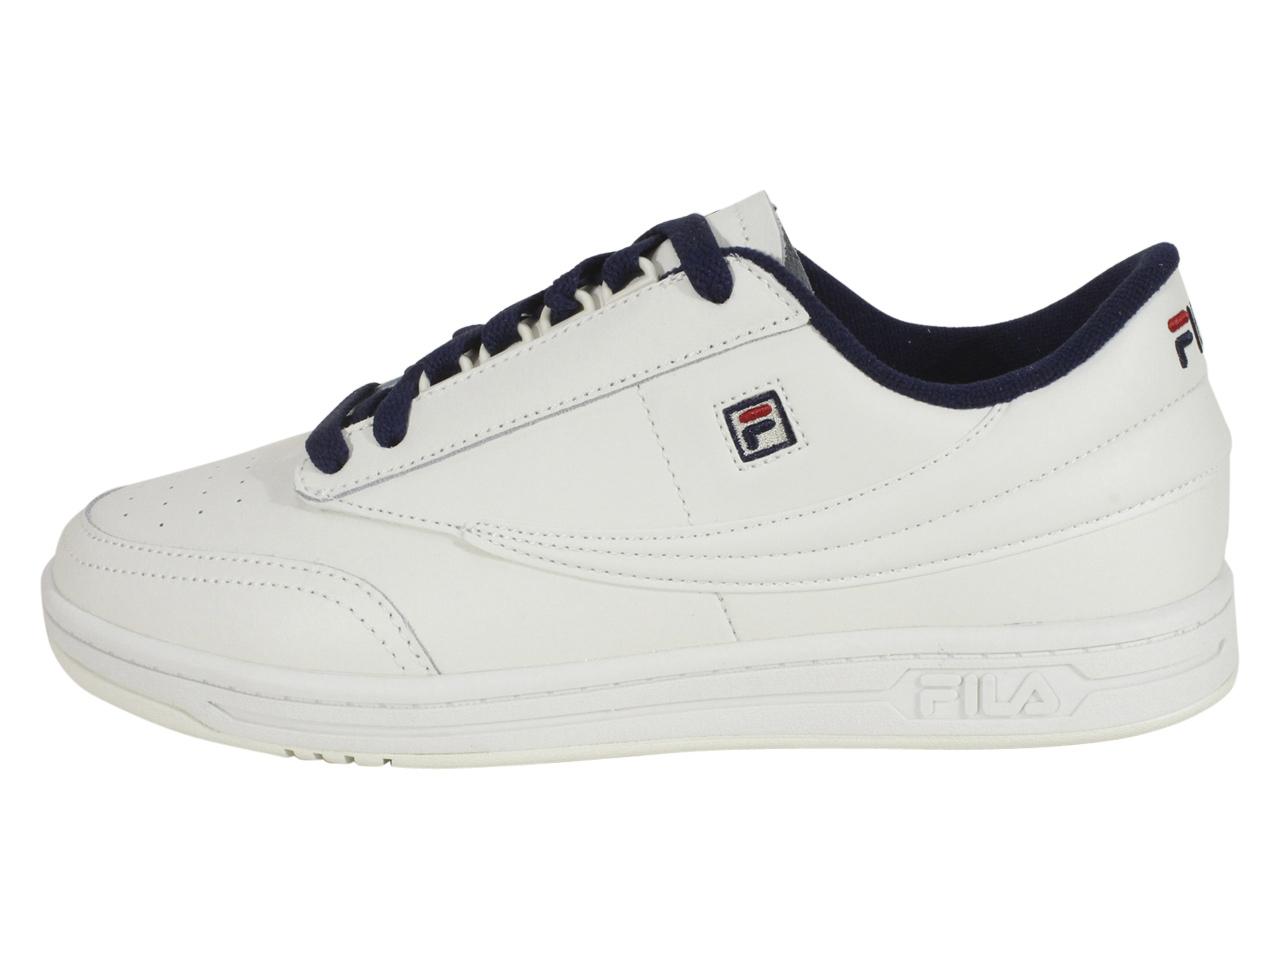 Fila Tennis-88 Sneakers Men's Low Top Shoes | JoyLot.com